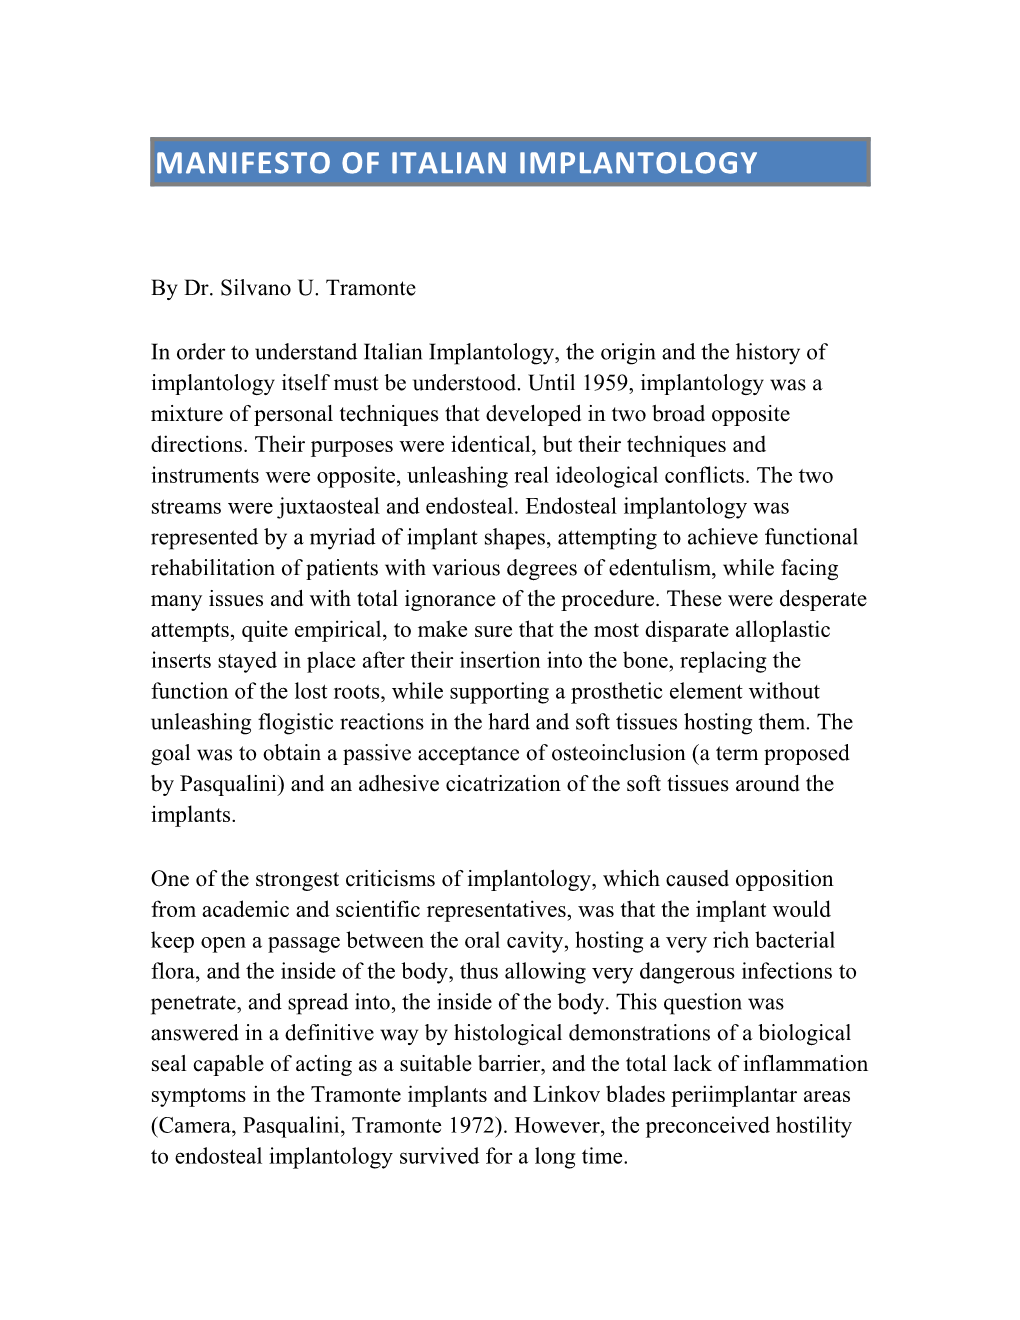 Manifest of Italian Implantology